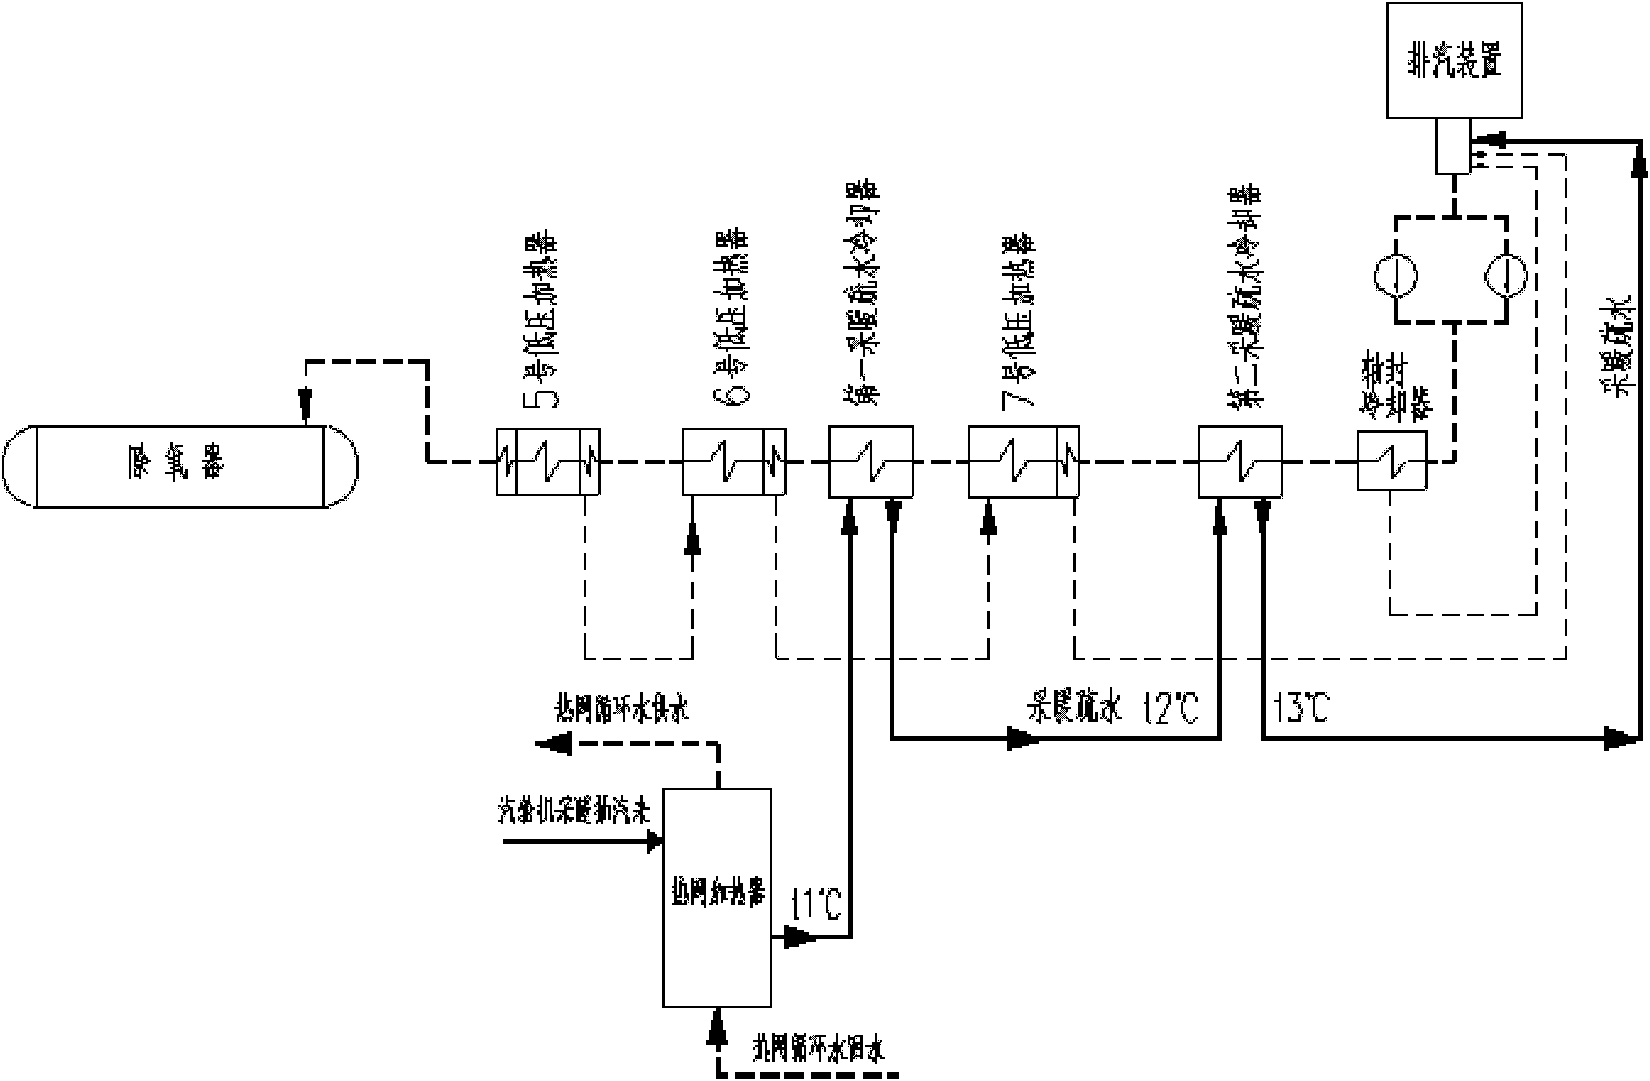 Supercritical/super-supercritical unit heating drain recovery method